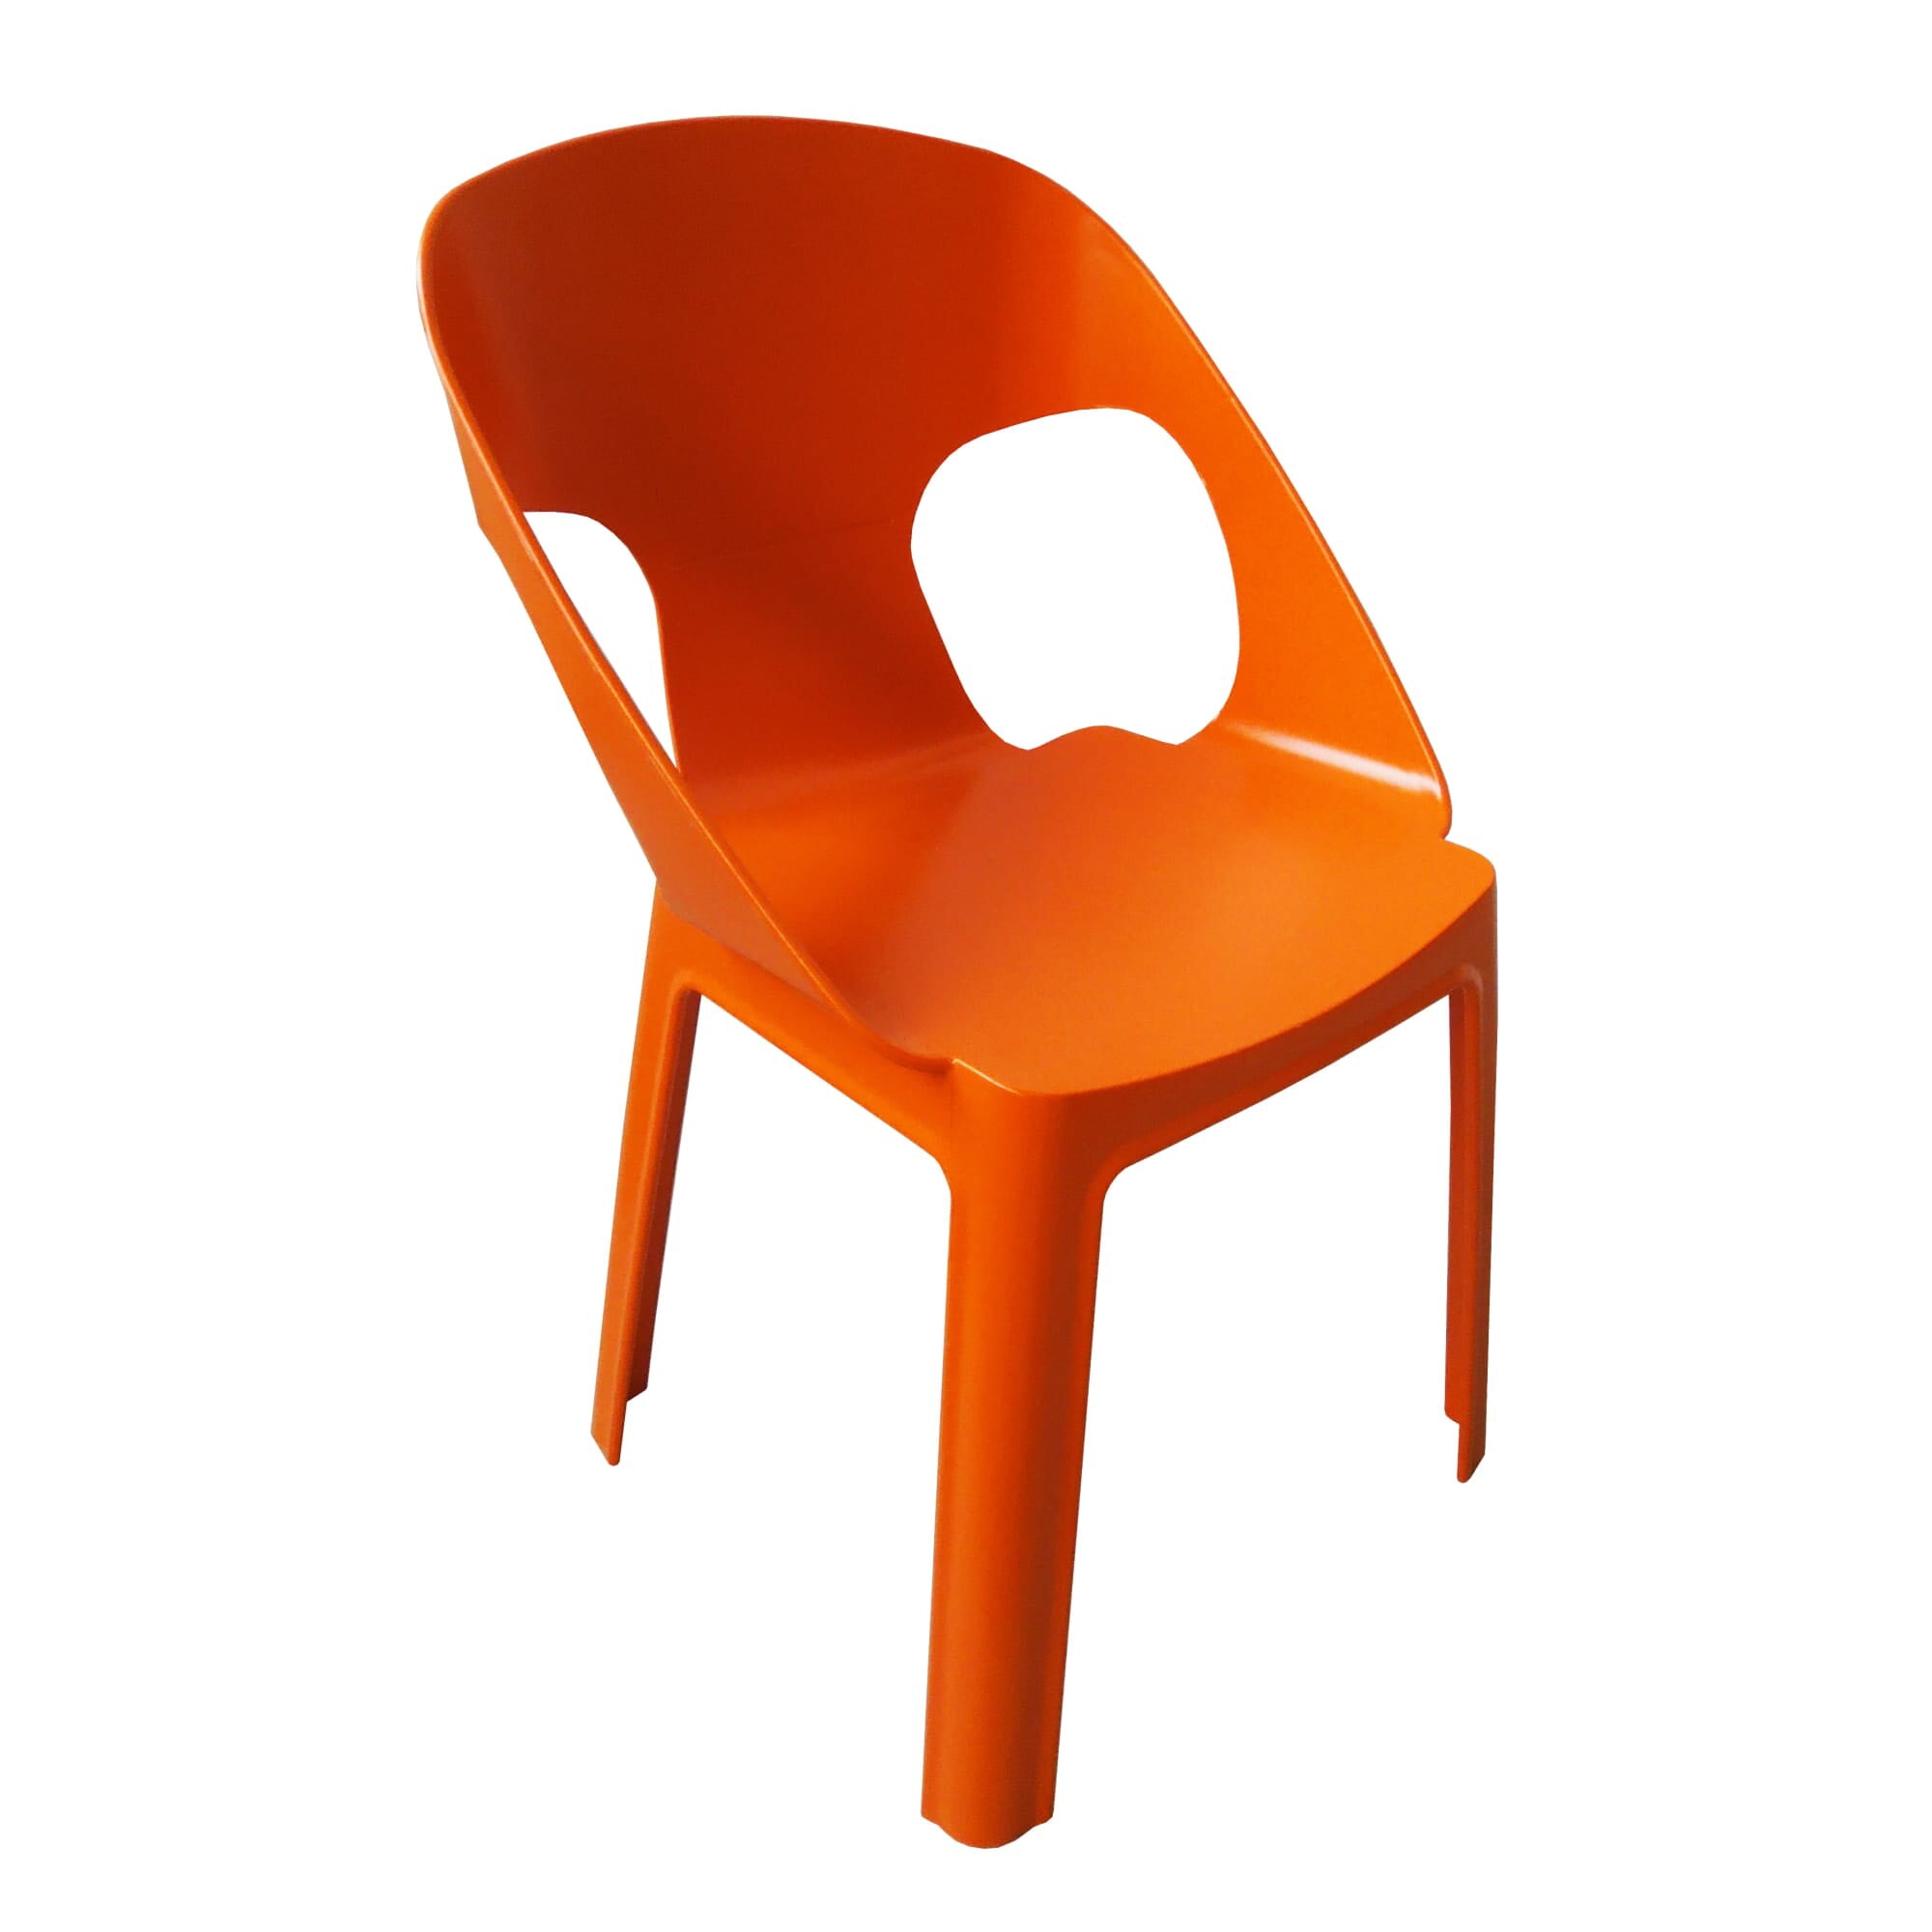 Garbar Rita high chair indoors, outdoor orange